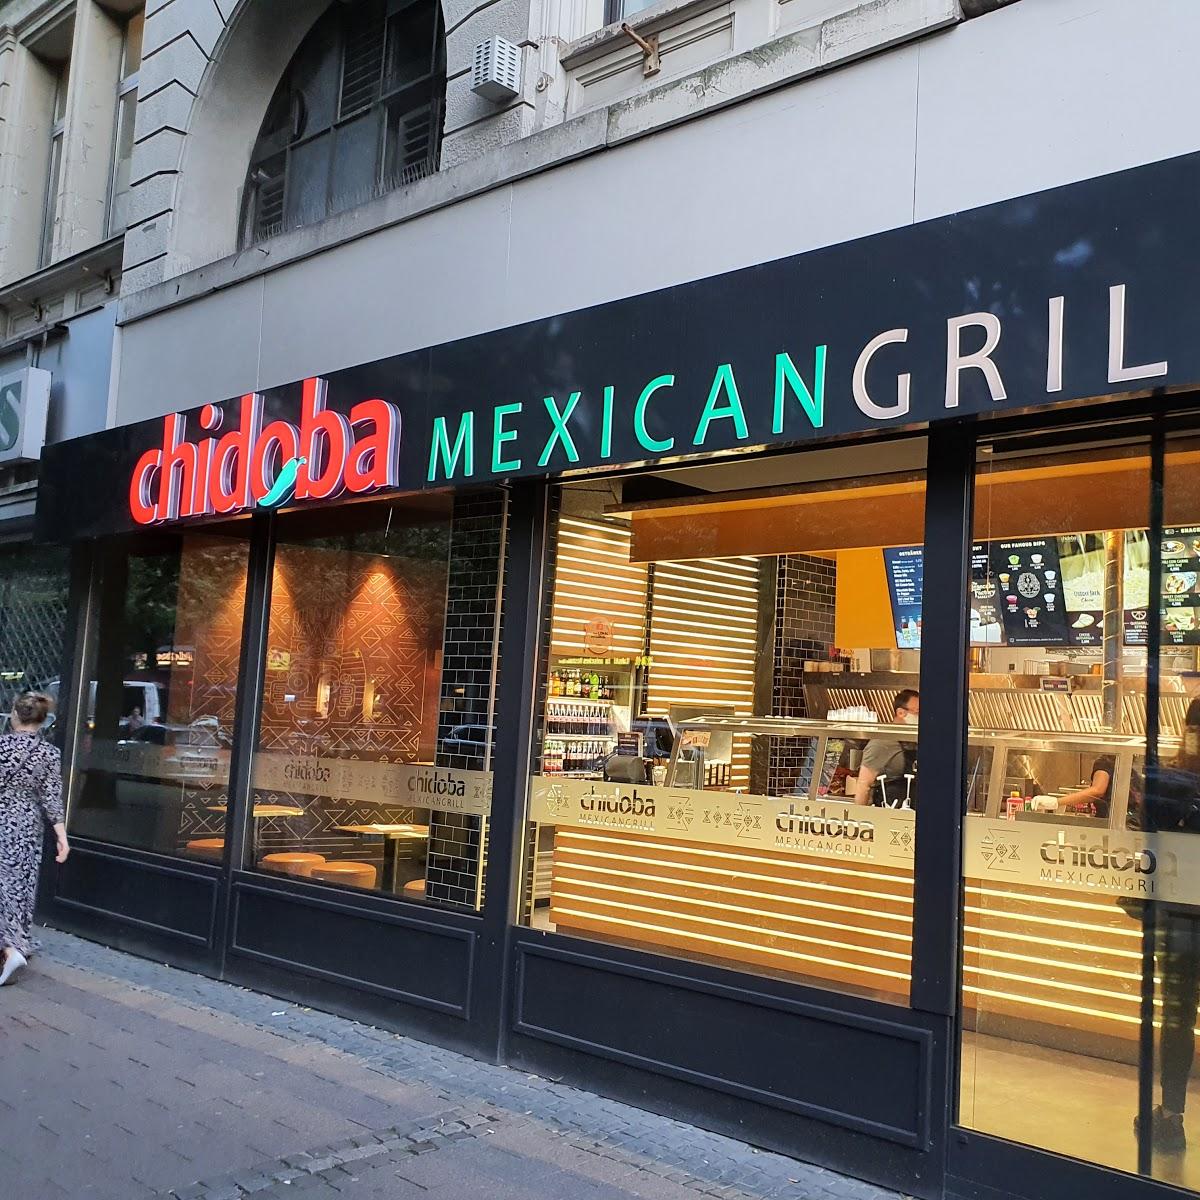 Restaurant "chidoba MEXICAN GRILL" in Frankfurt am Main